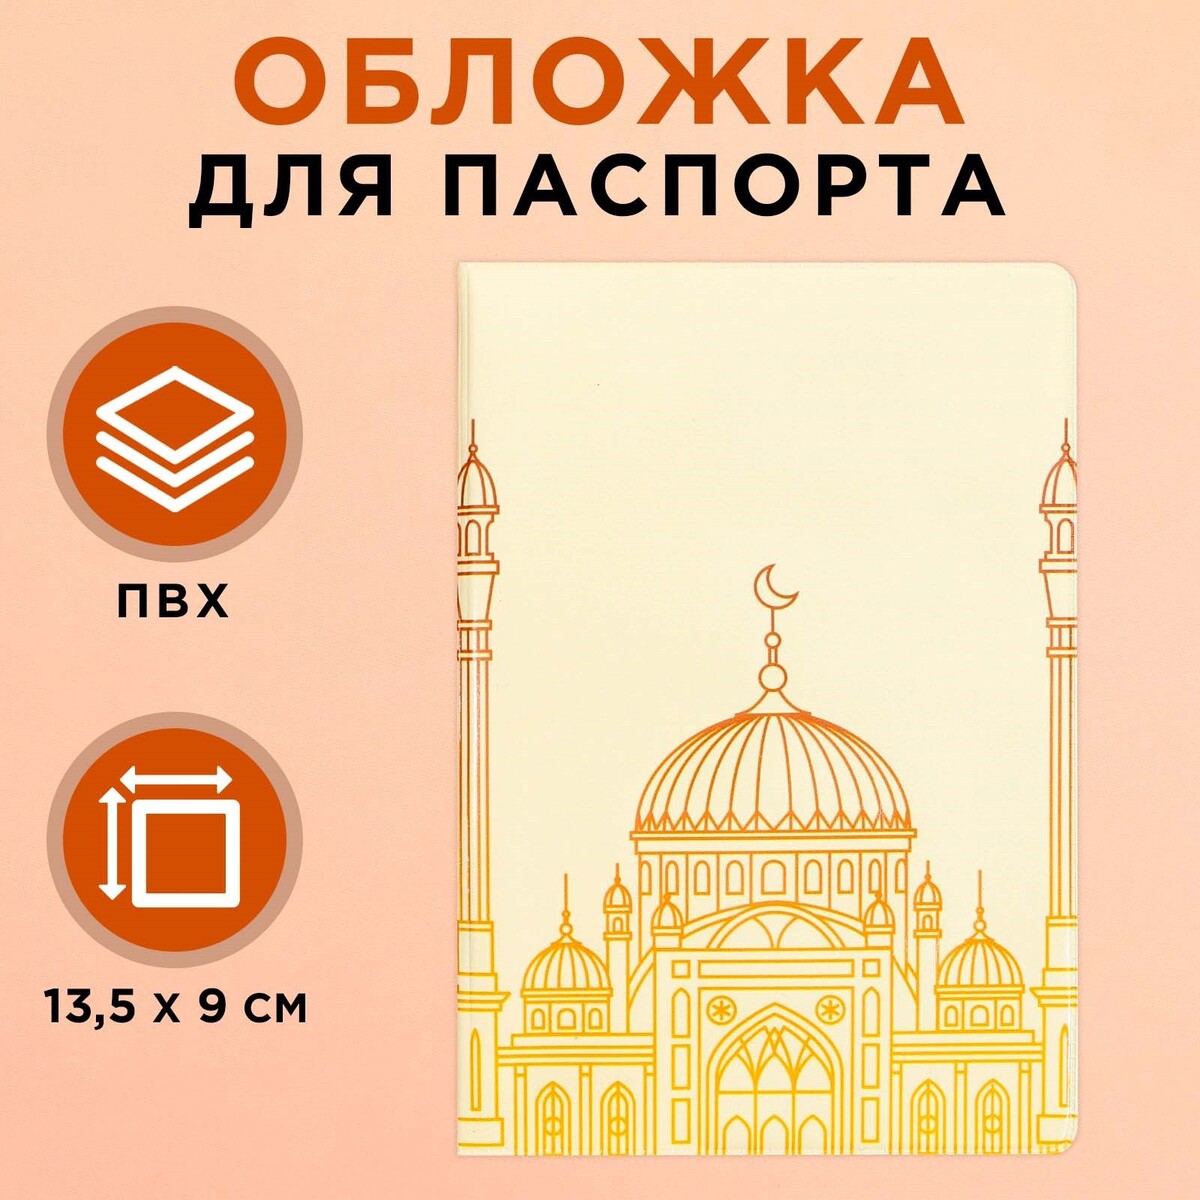 Обложка для паспорта на рамадан